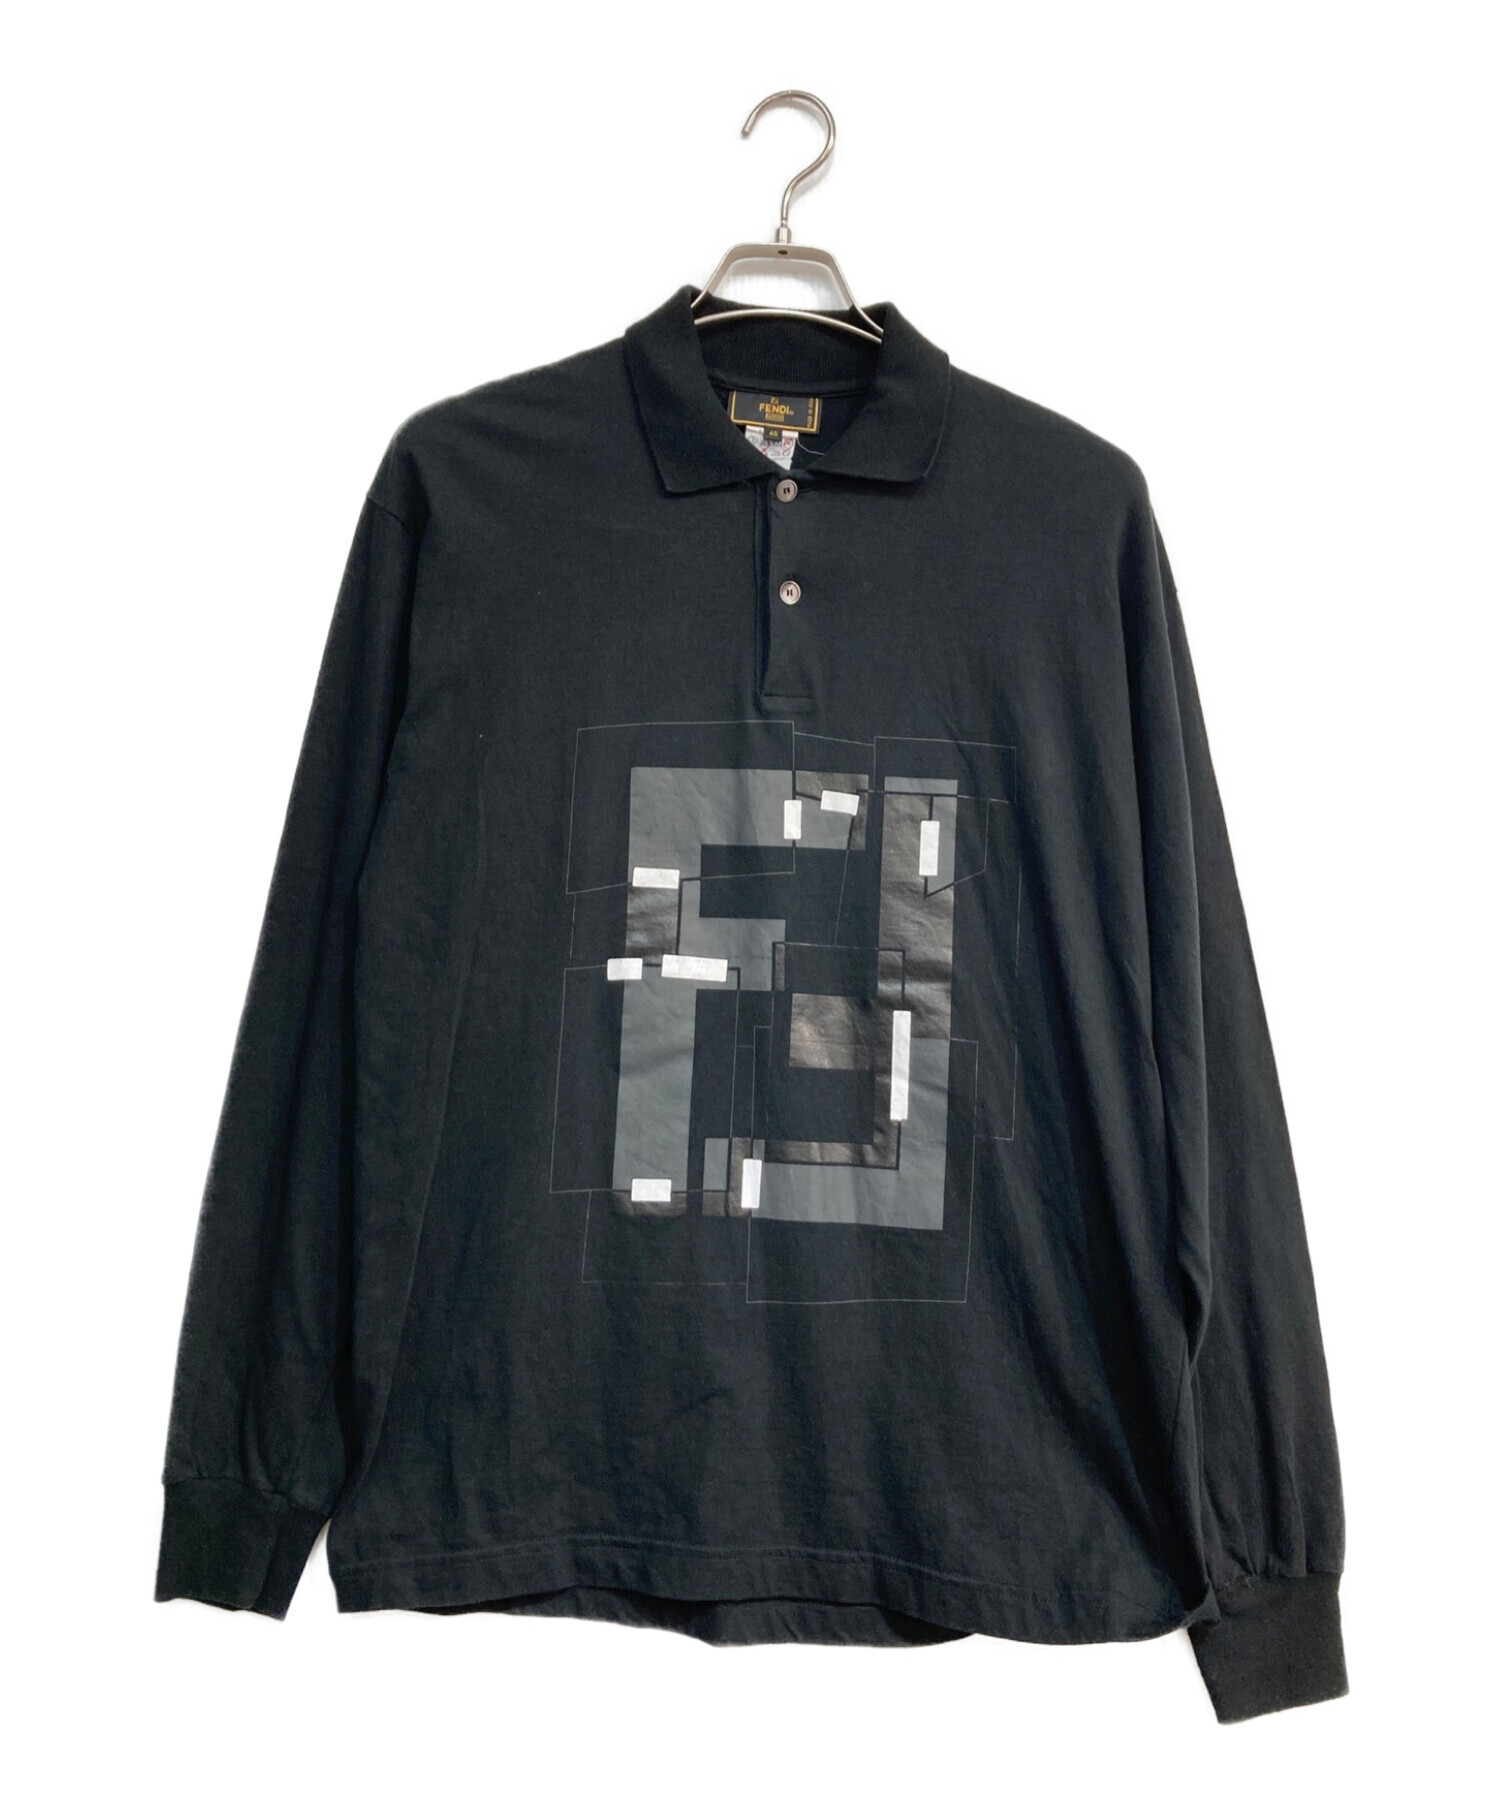 FENDI (フェンディ) フロントプリントポロシャツ ブラック サイズ:M